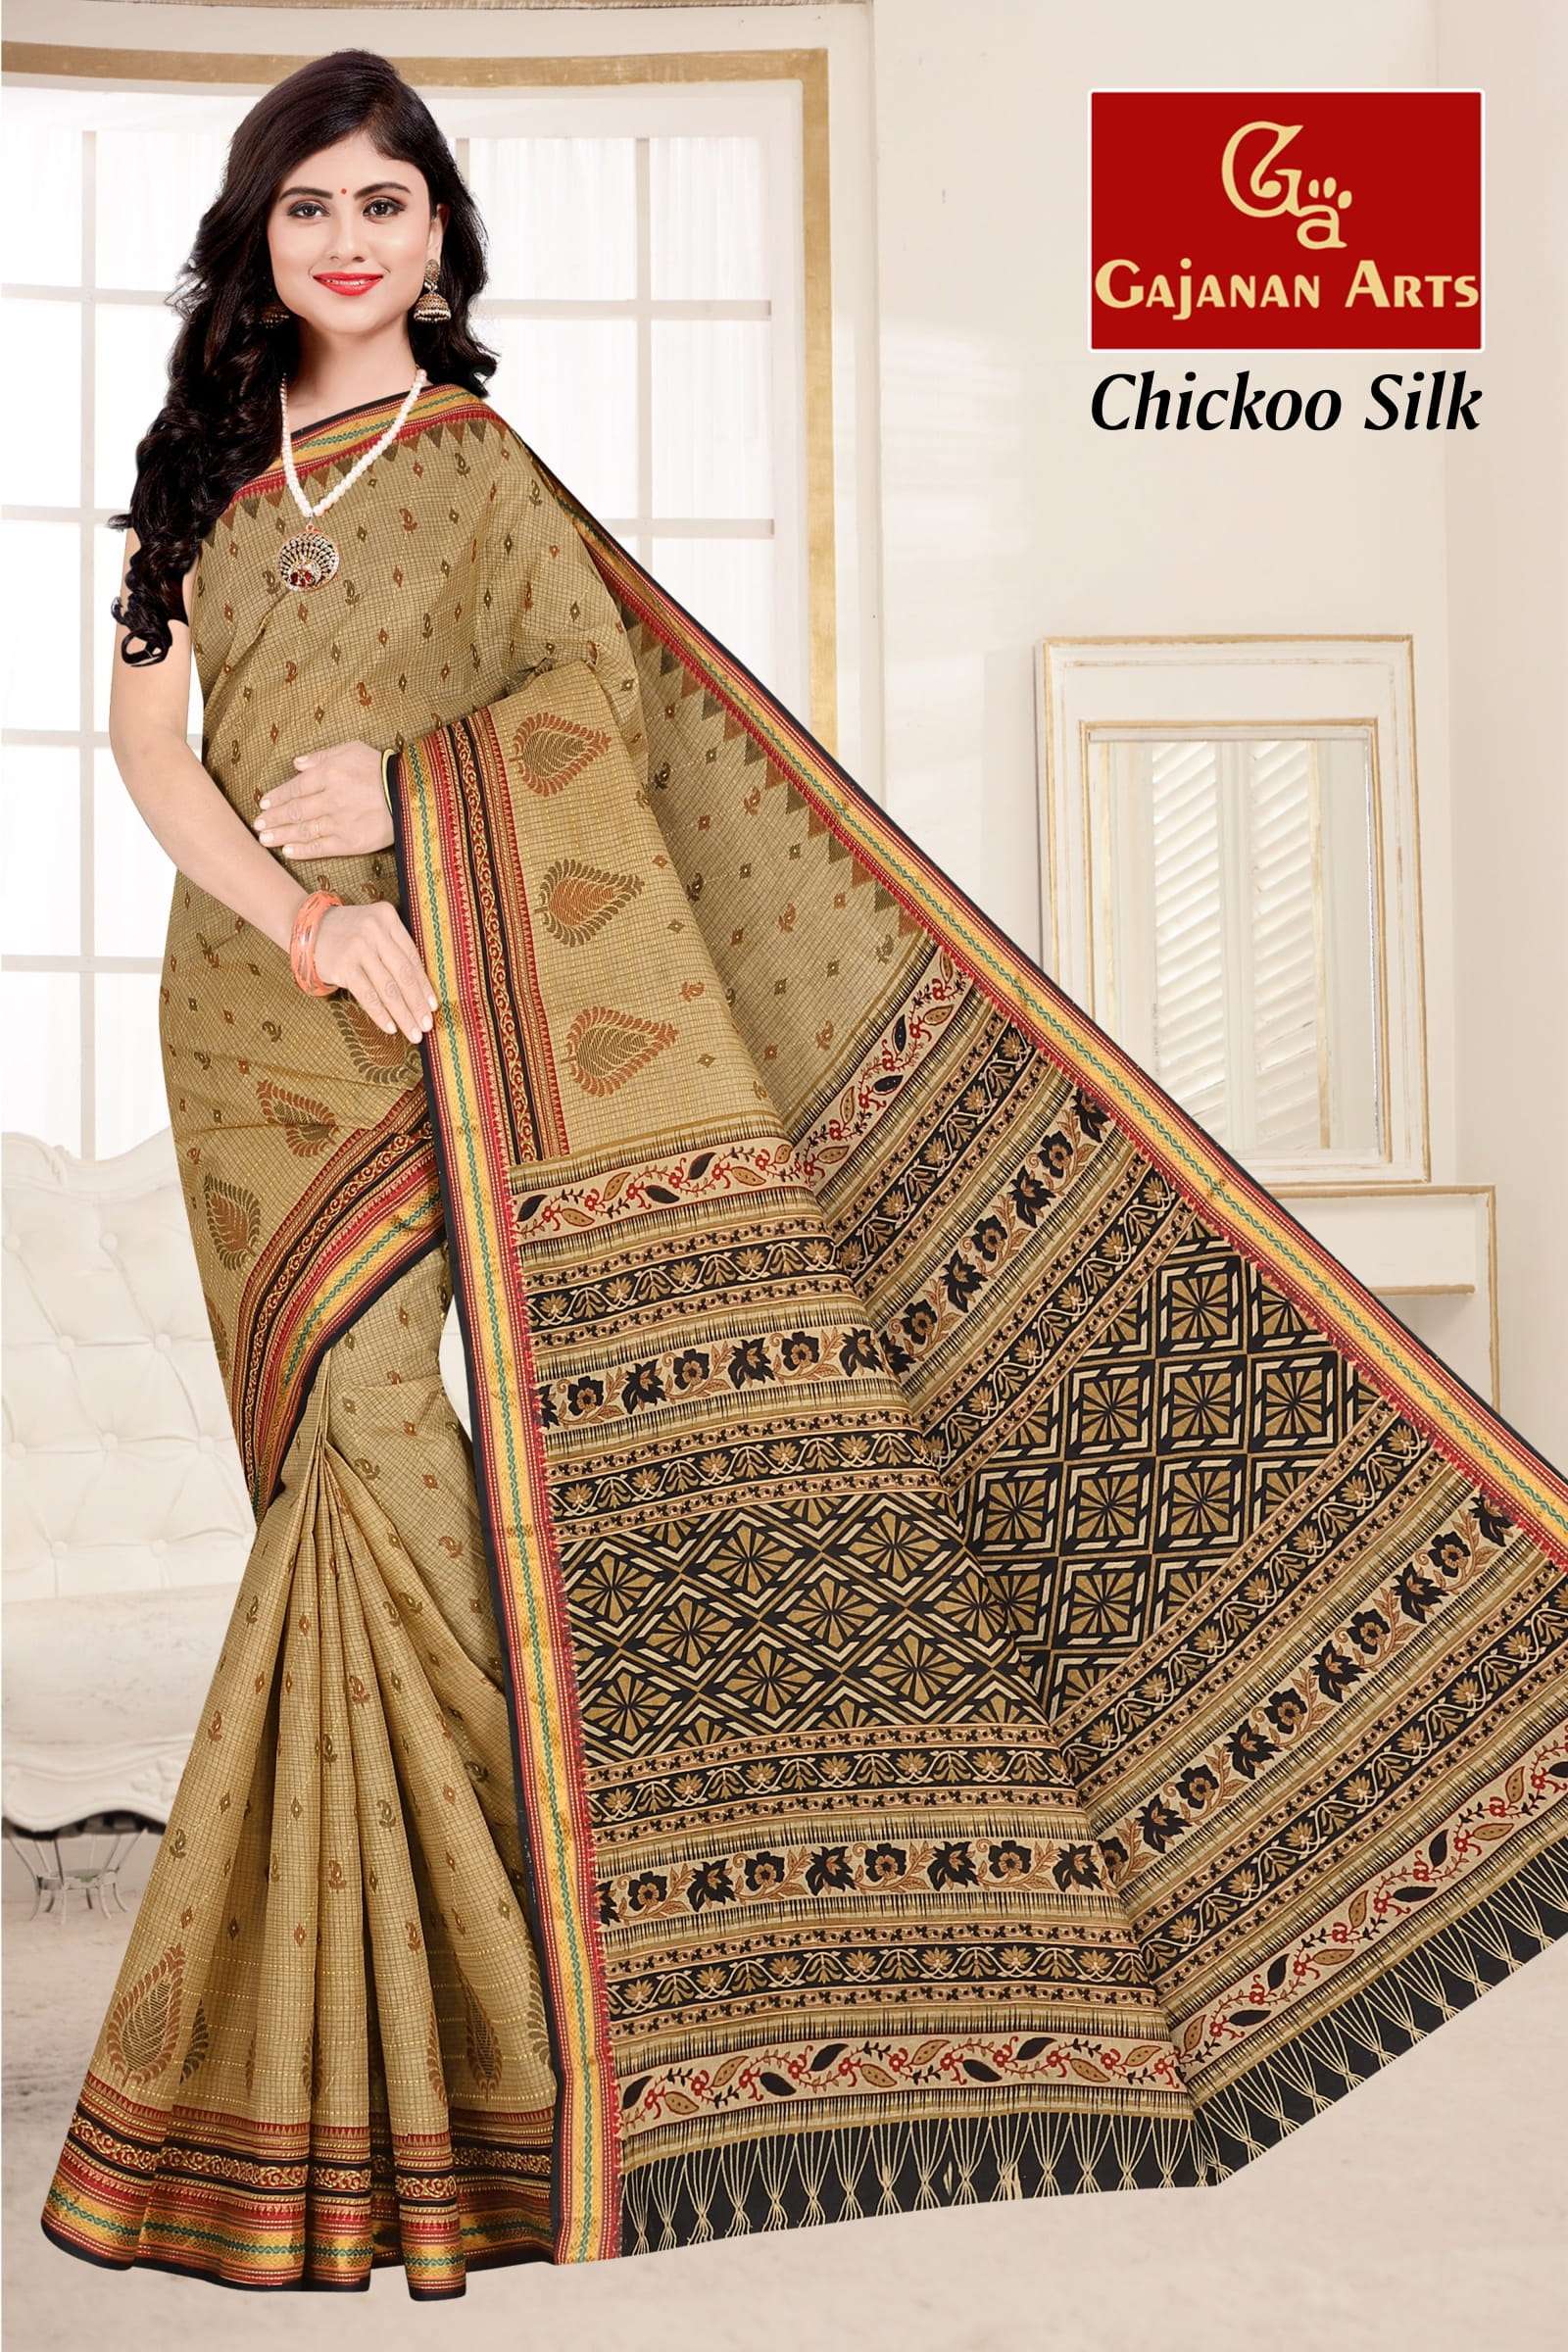 gajanan arts chickoo silk pure cotton sarees 